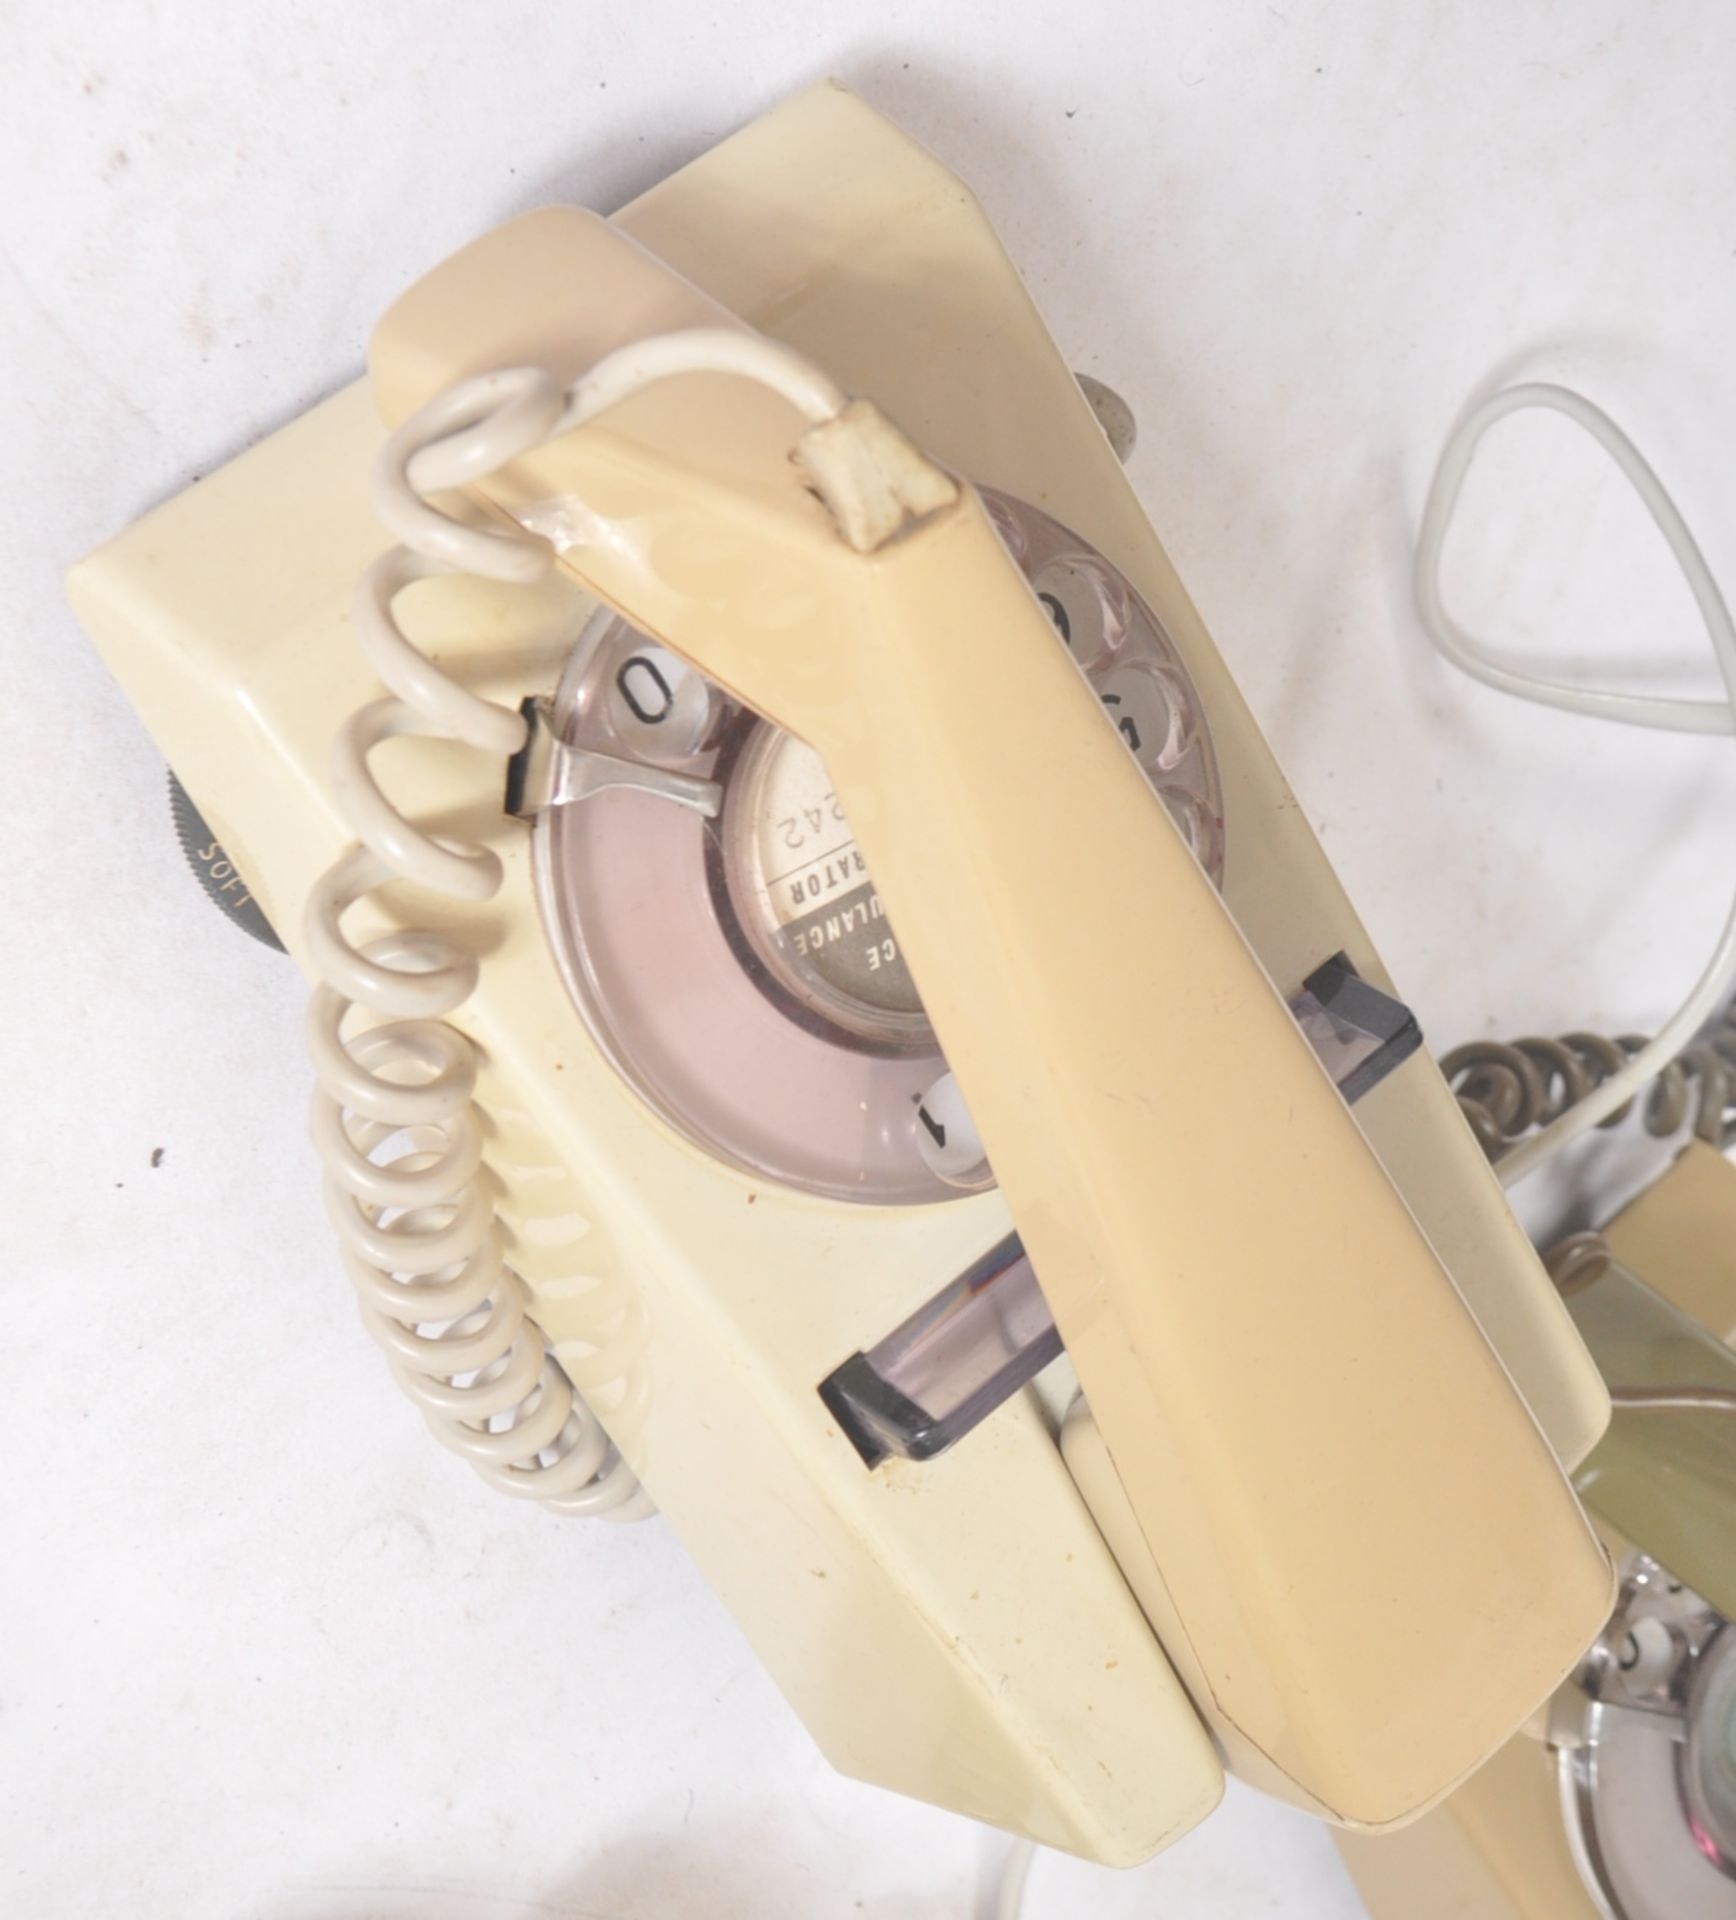 COLLECTION OF NINE VINTAGE 1970S GPO TRIMBONE TELEPHONES - Image 5 of 9